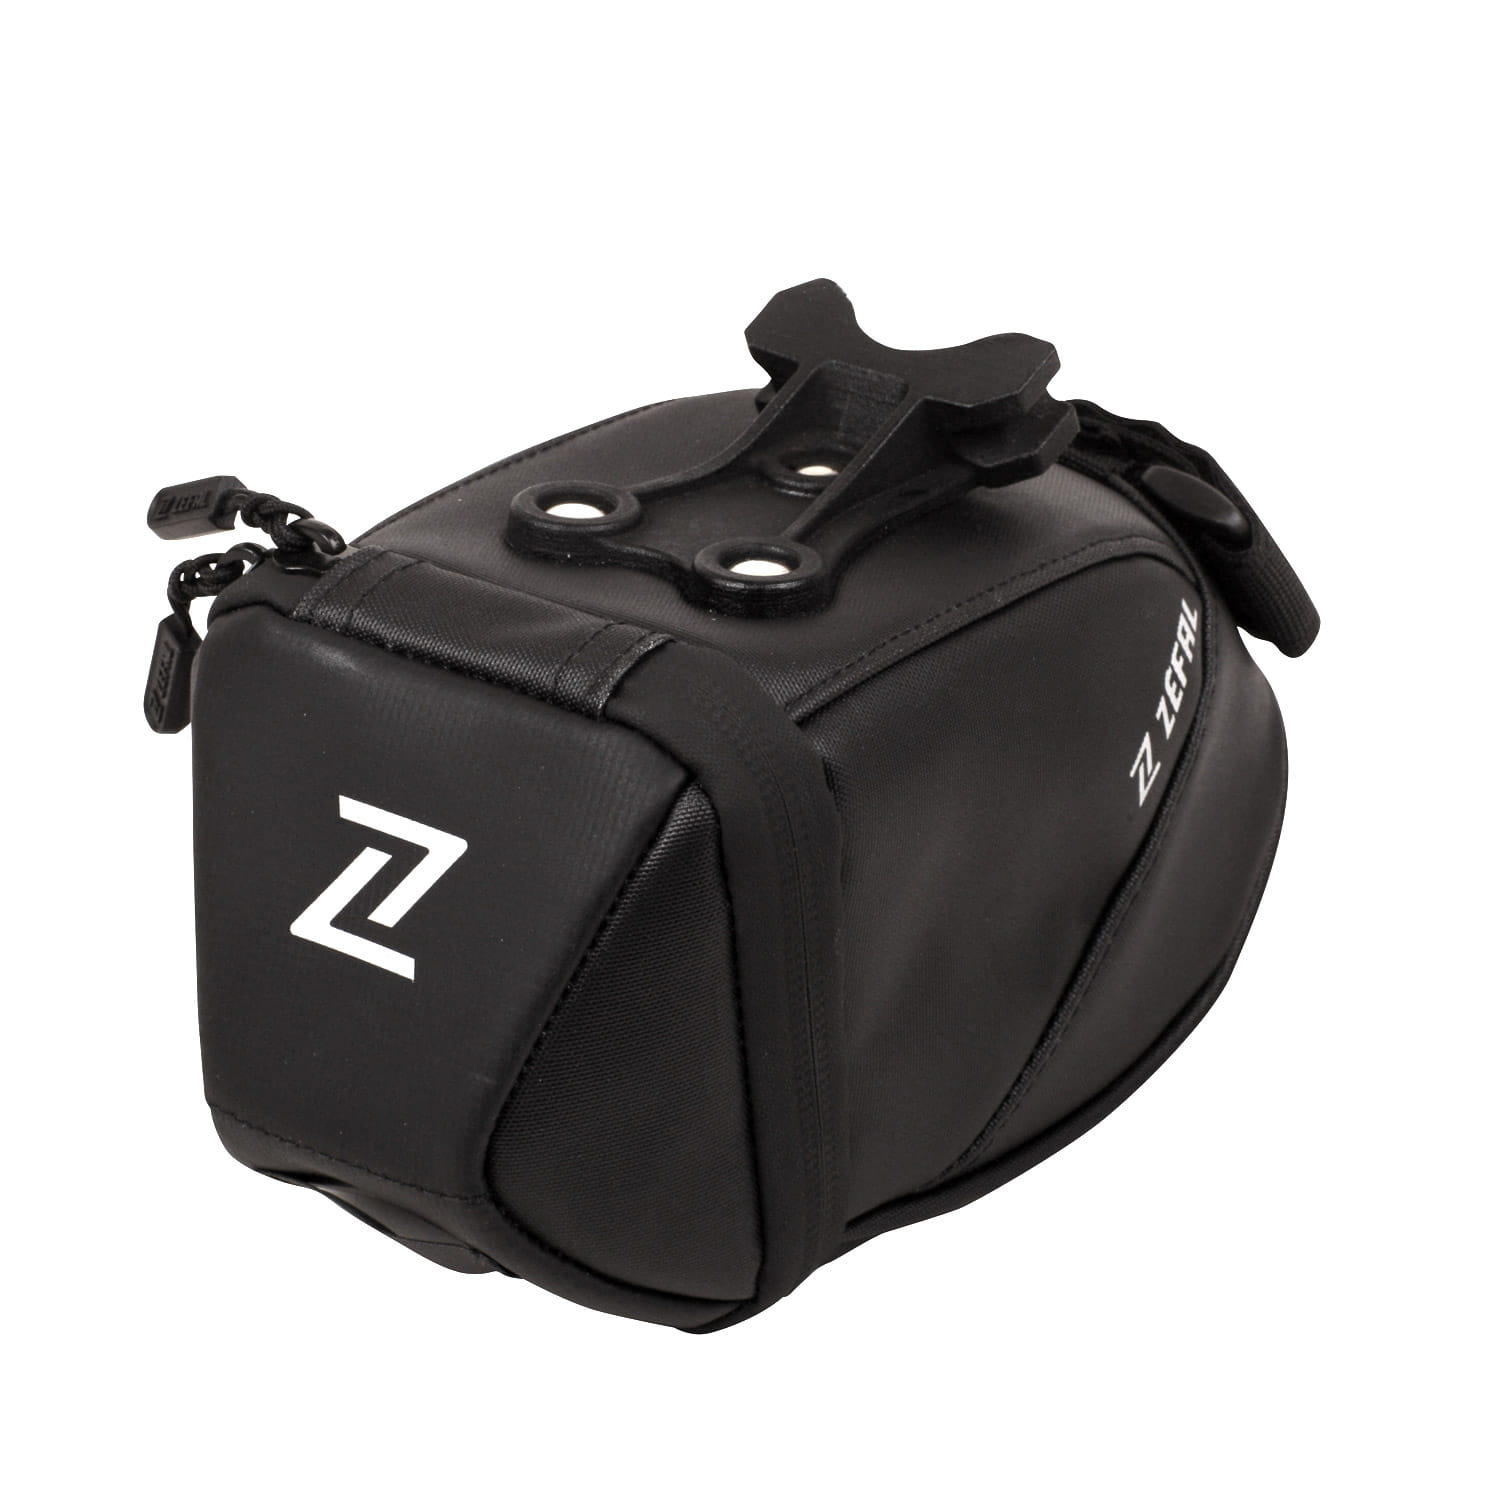 Zefal Iron Pack 2 TF Saddlebag Black 0.5 / 0.9 L